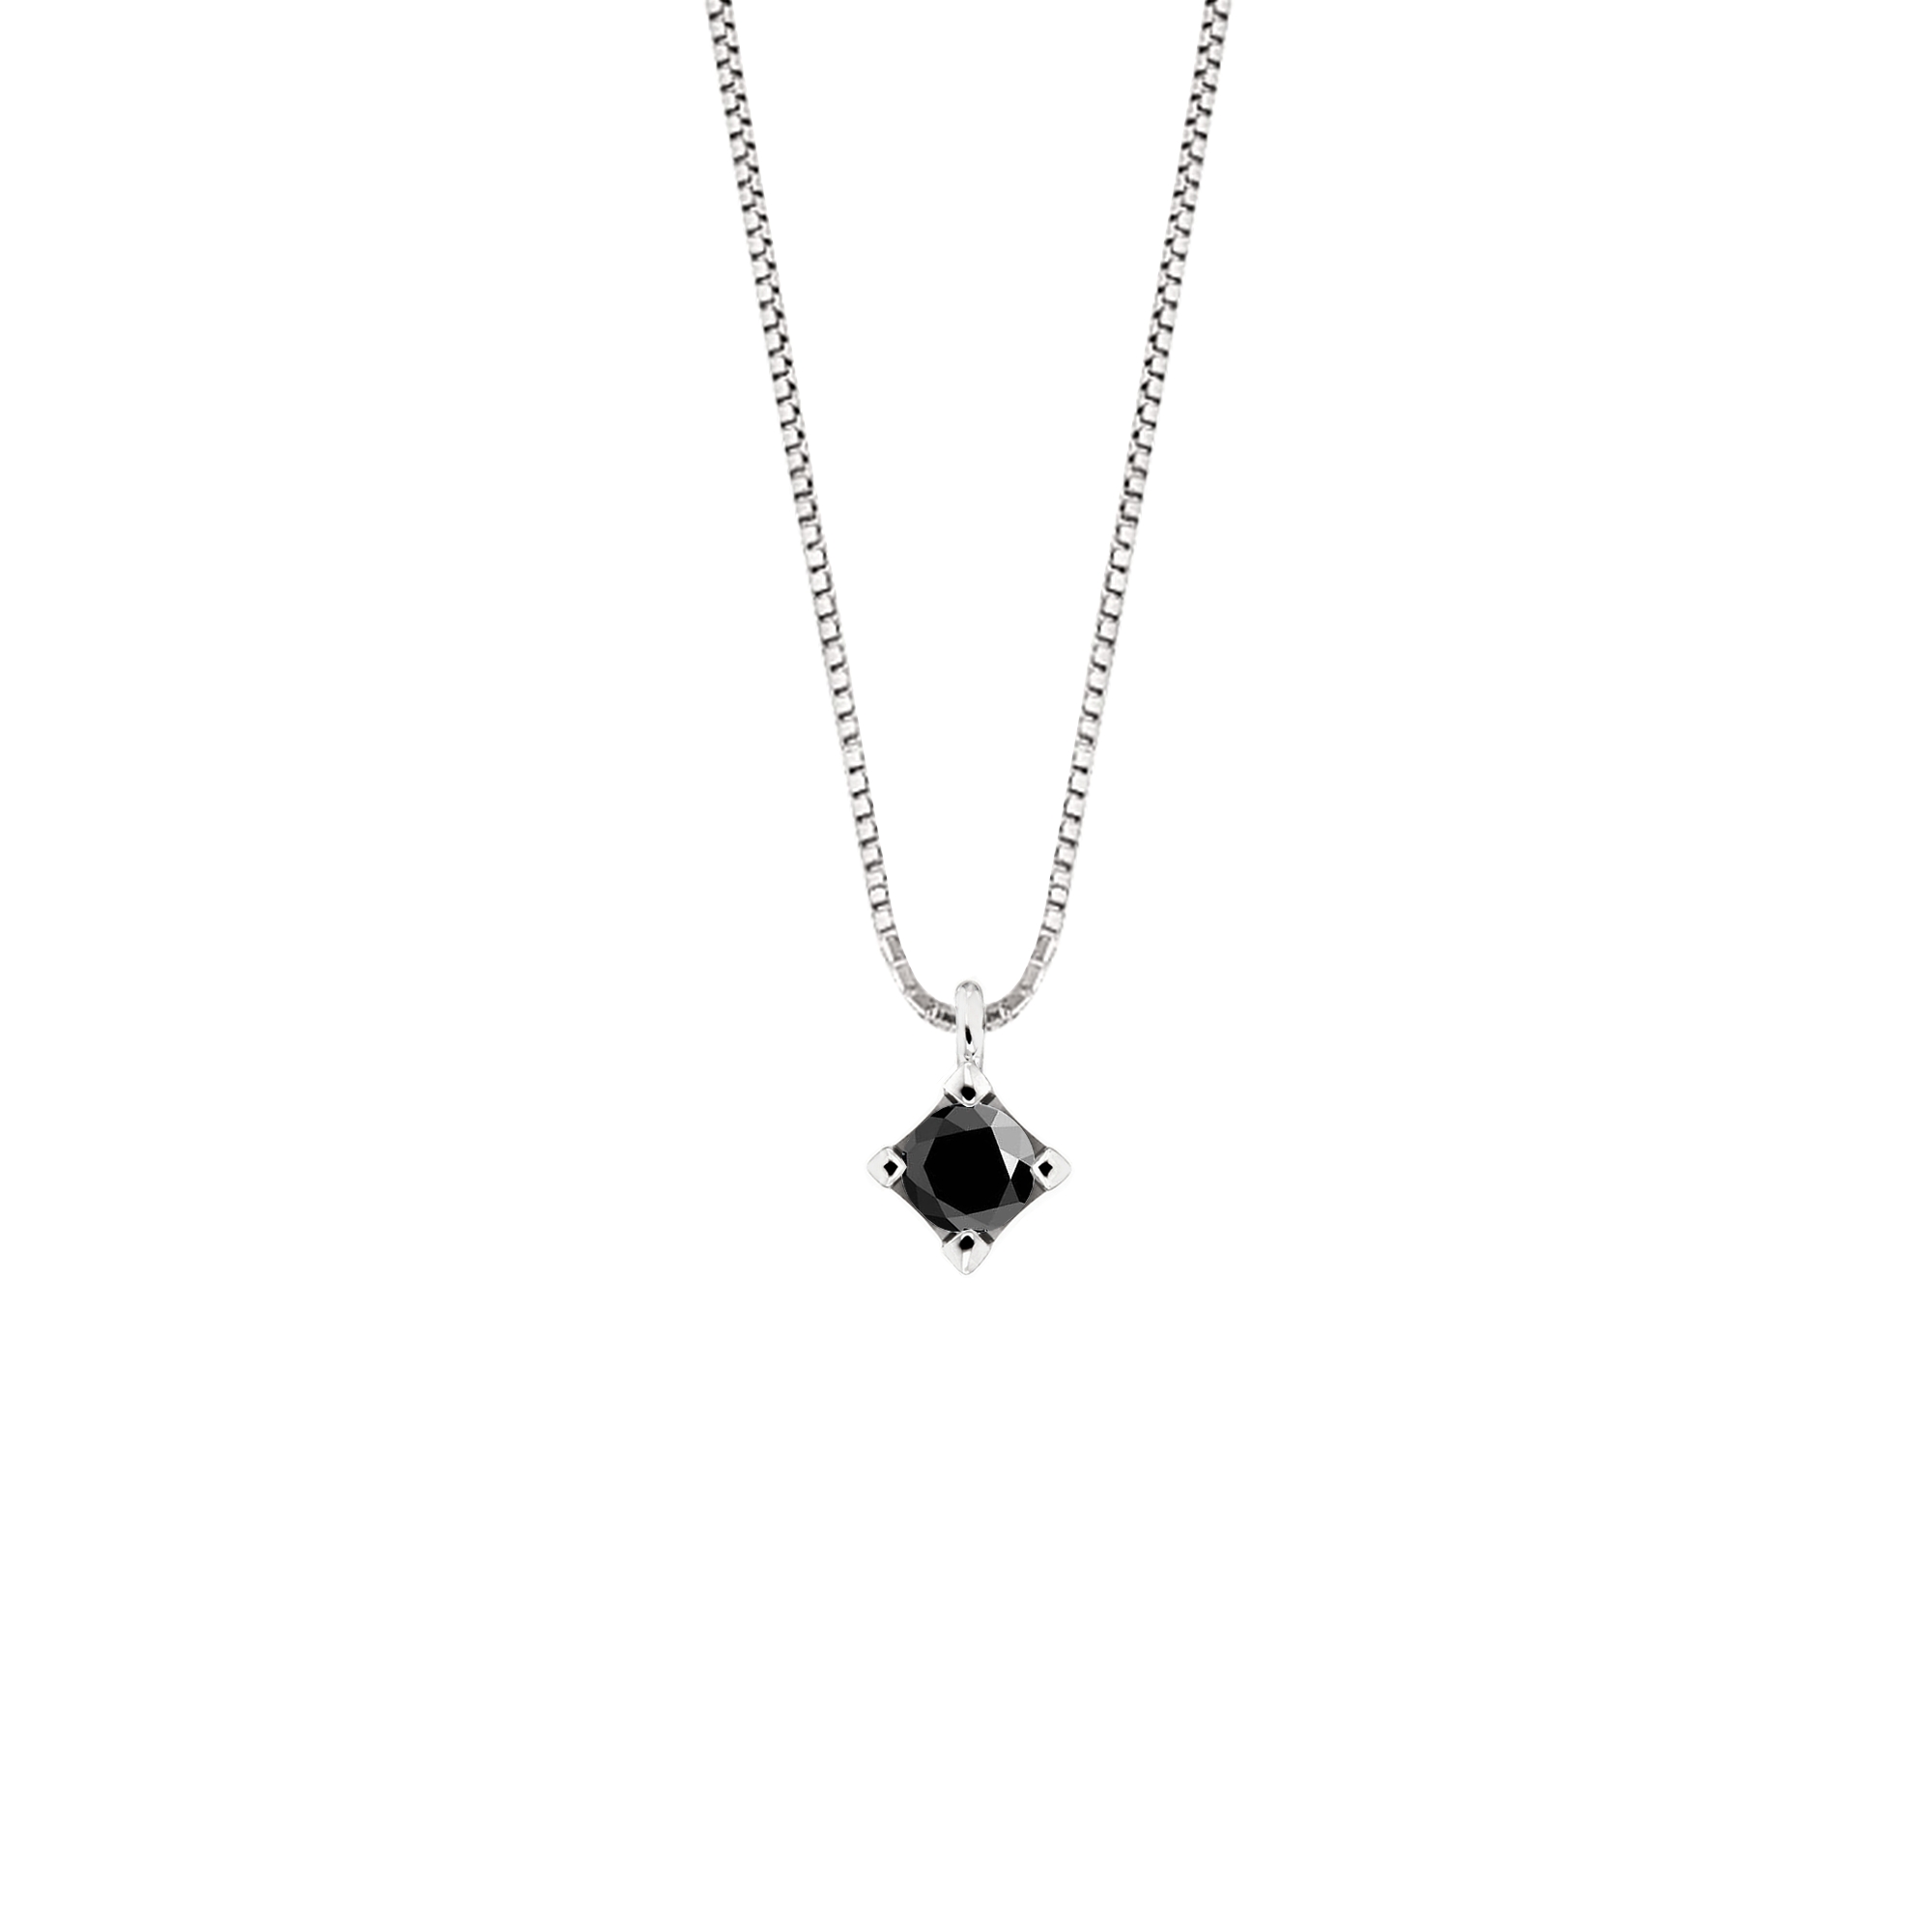 Lantisor din aur 18K cu pandantiv cu diamant negru 0,05 ct., model Orsini CI1393N-05